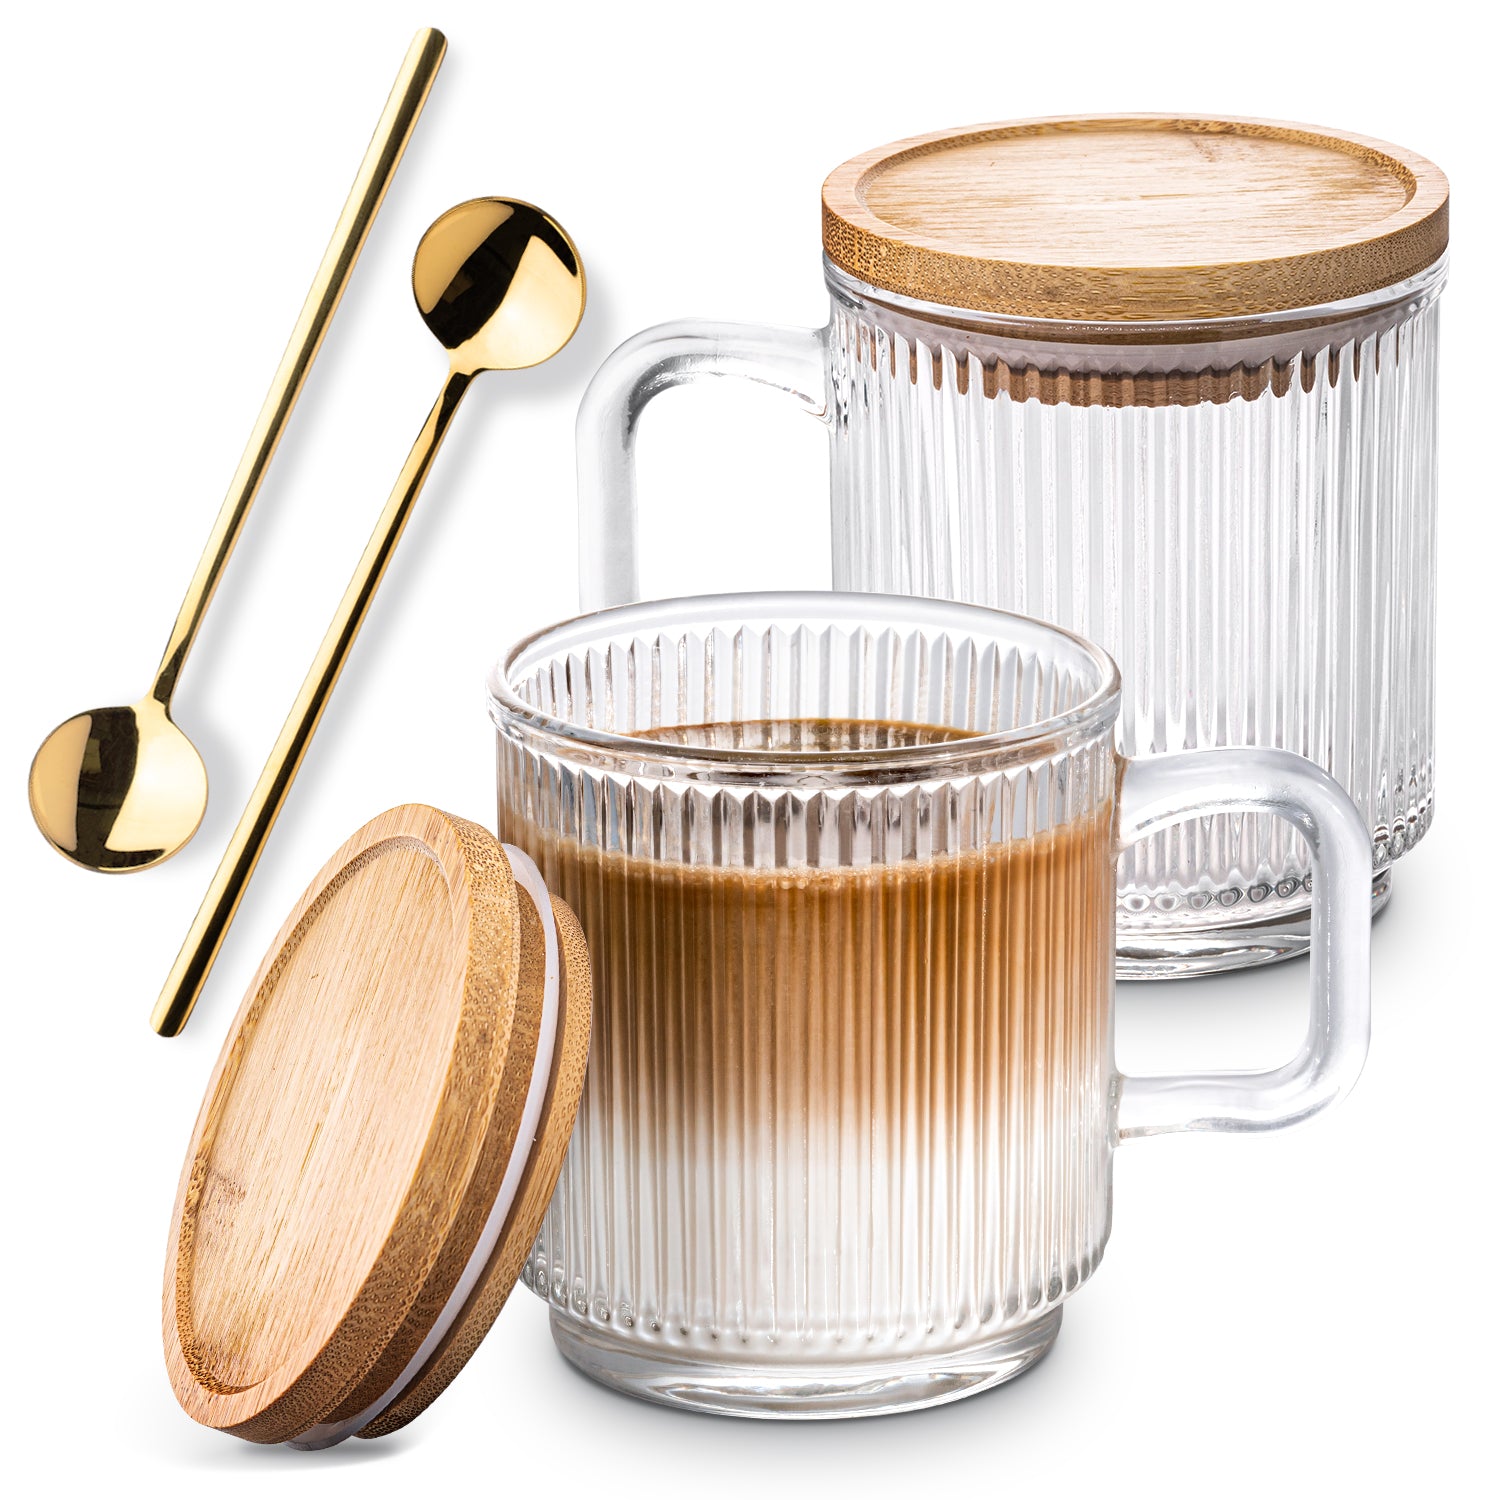 Combler Glass Coffee Mugs